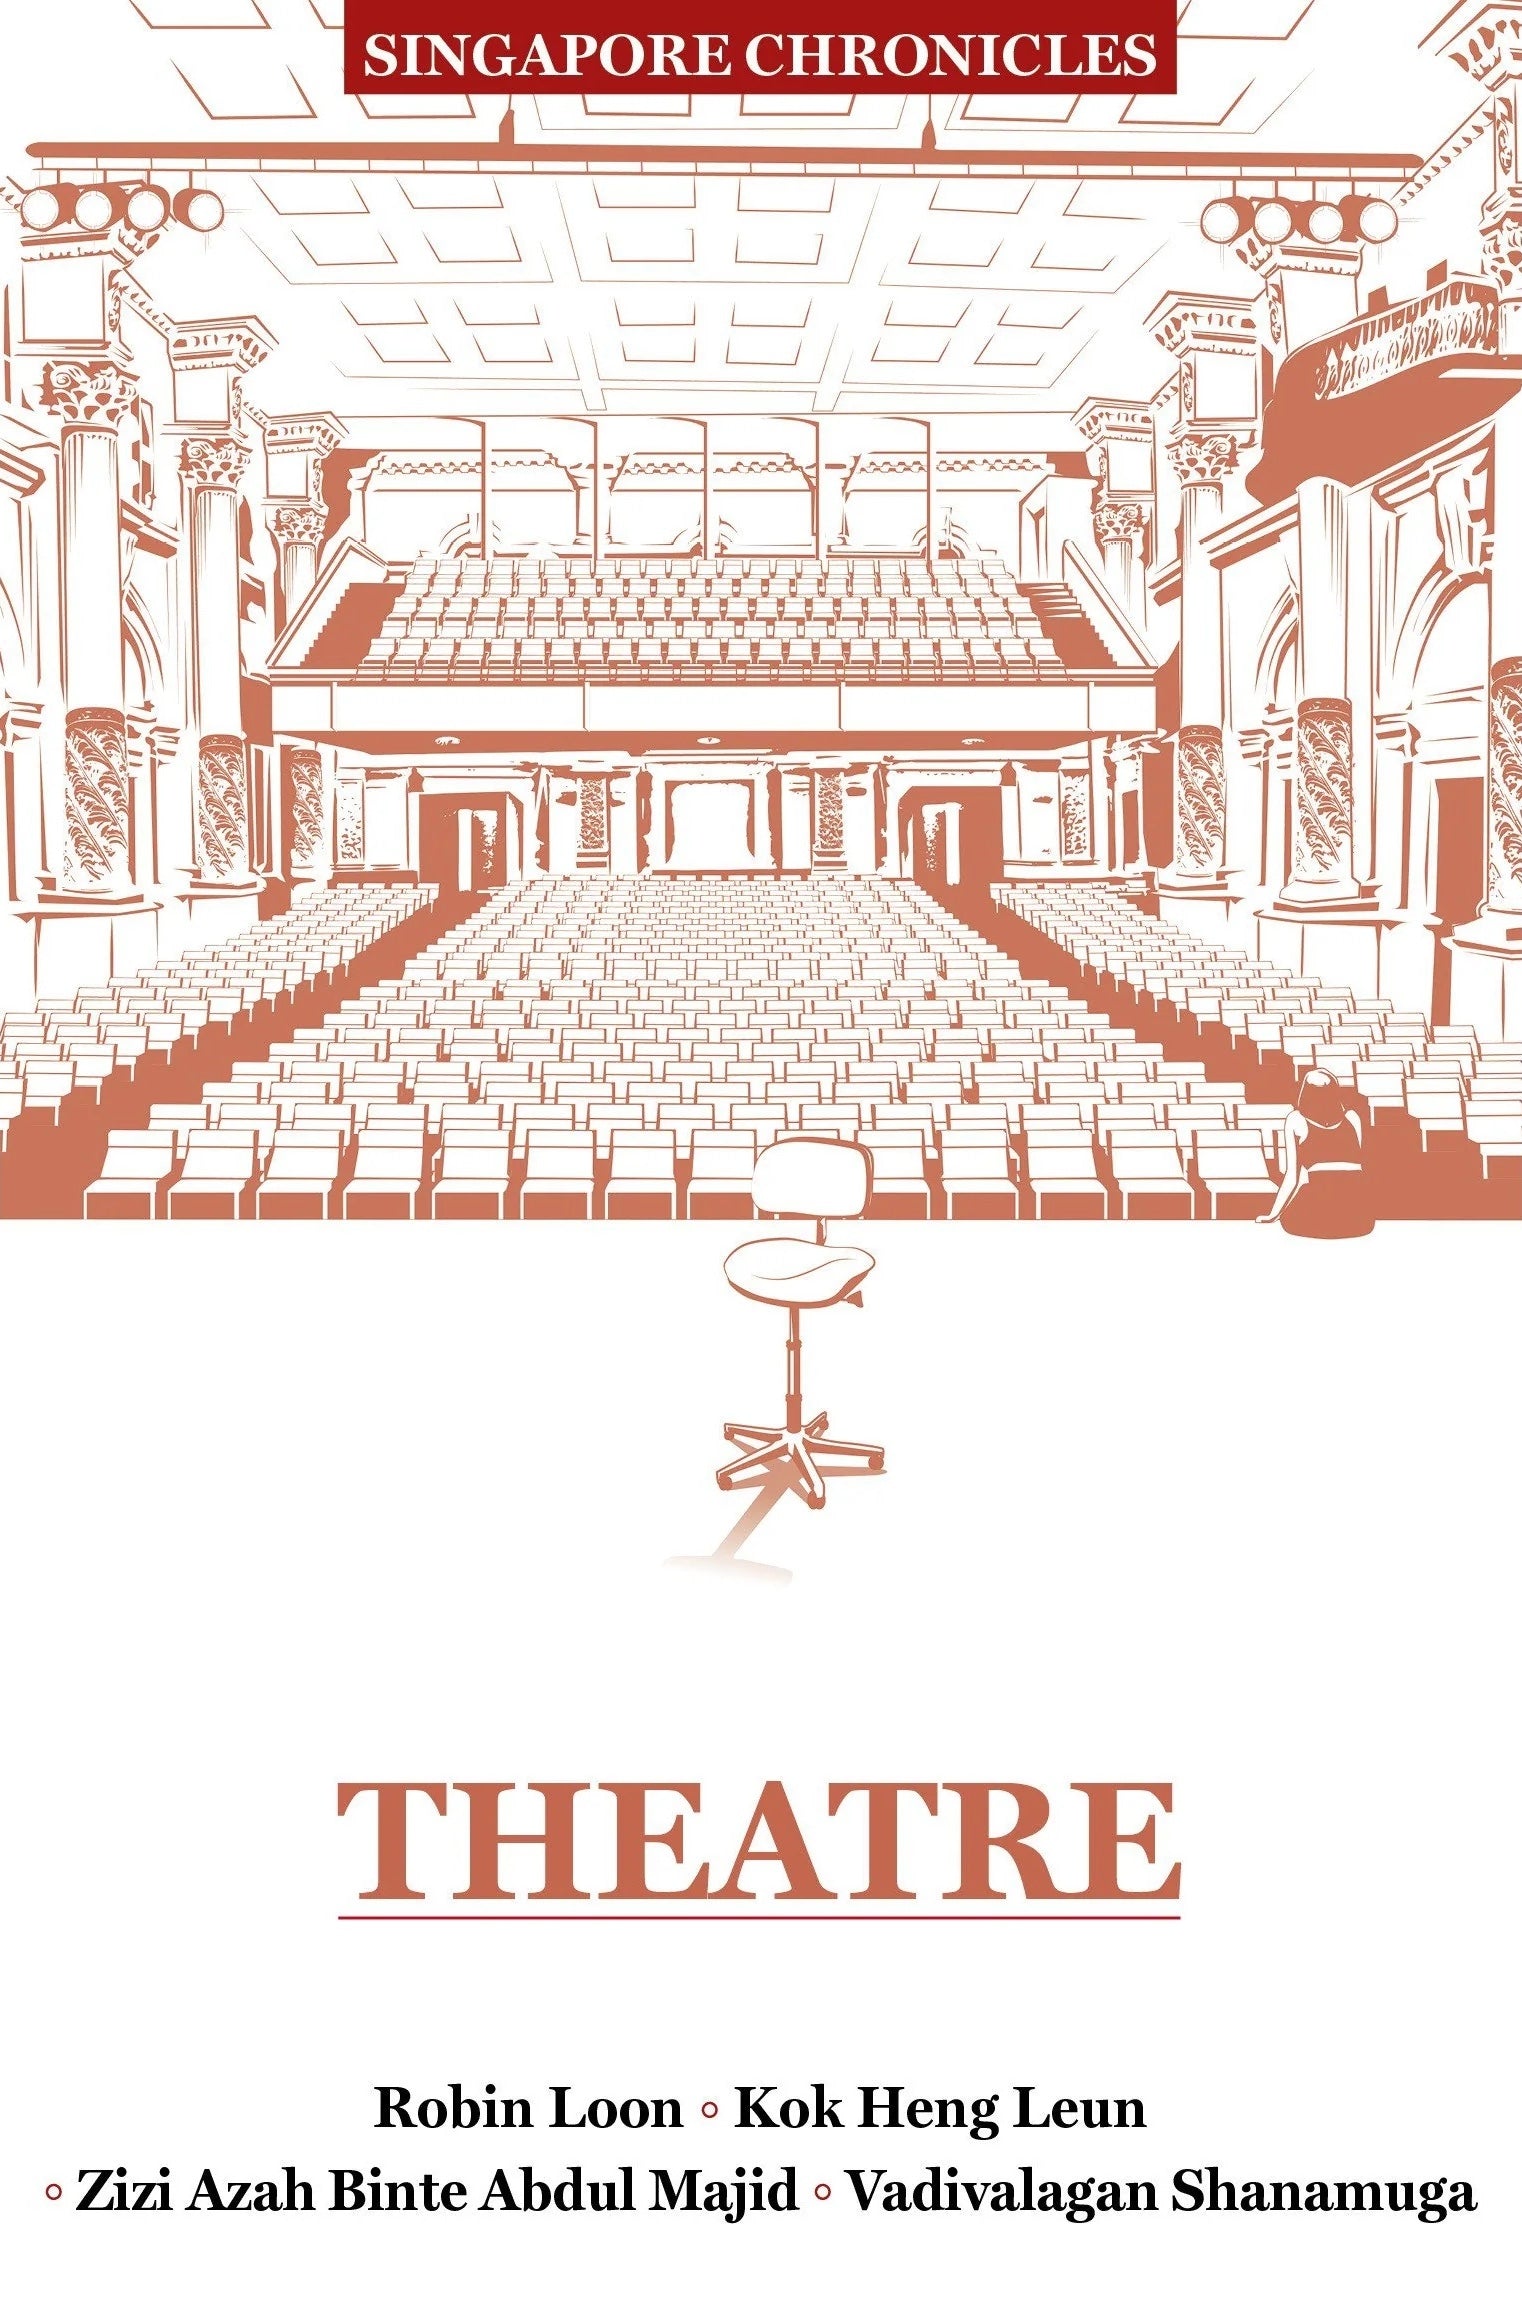 Singapore Chronicles: Theatre